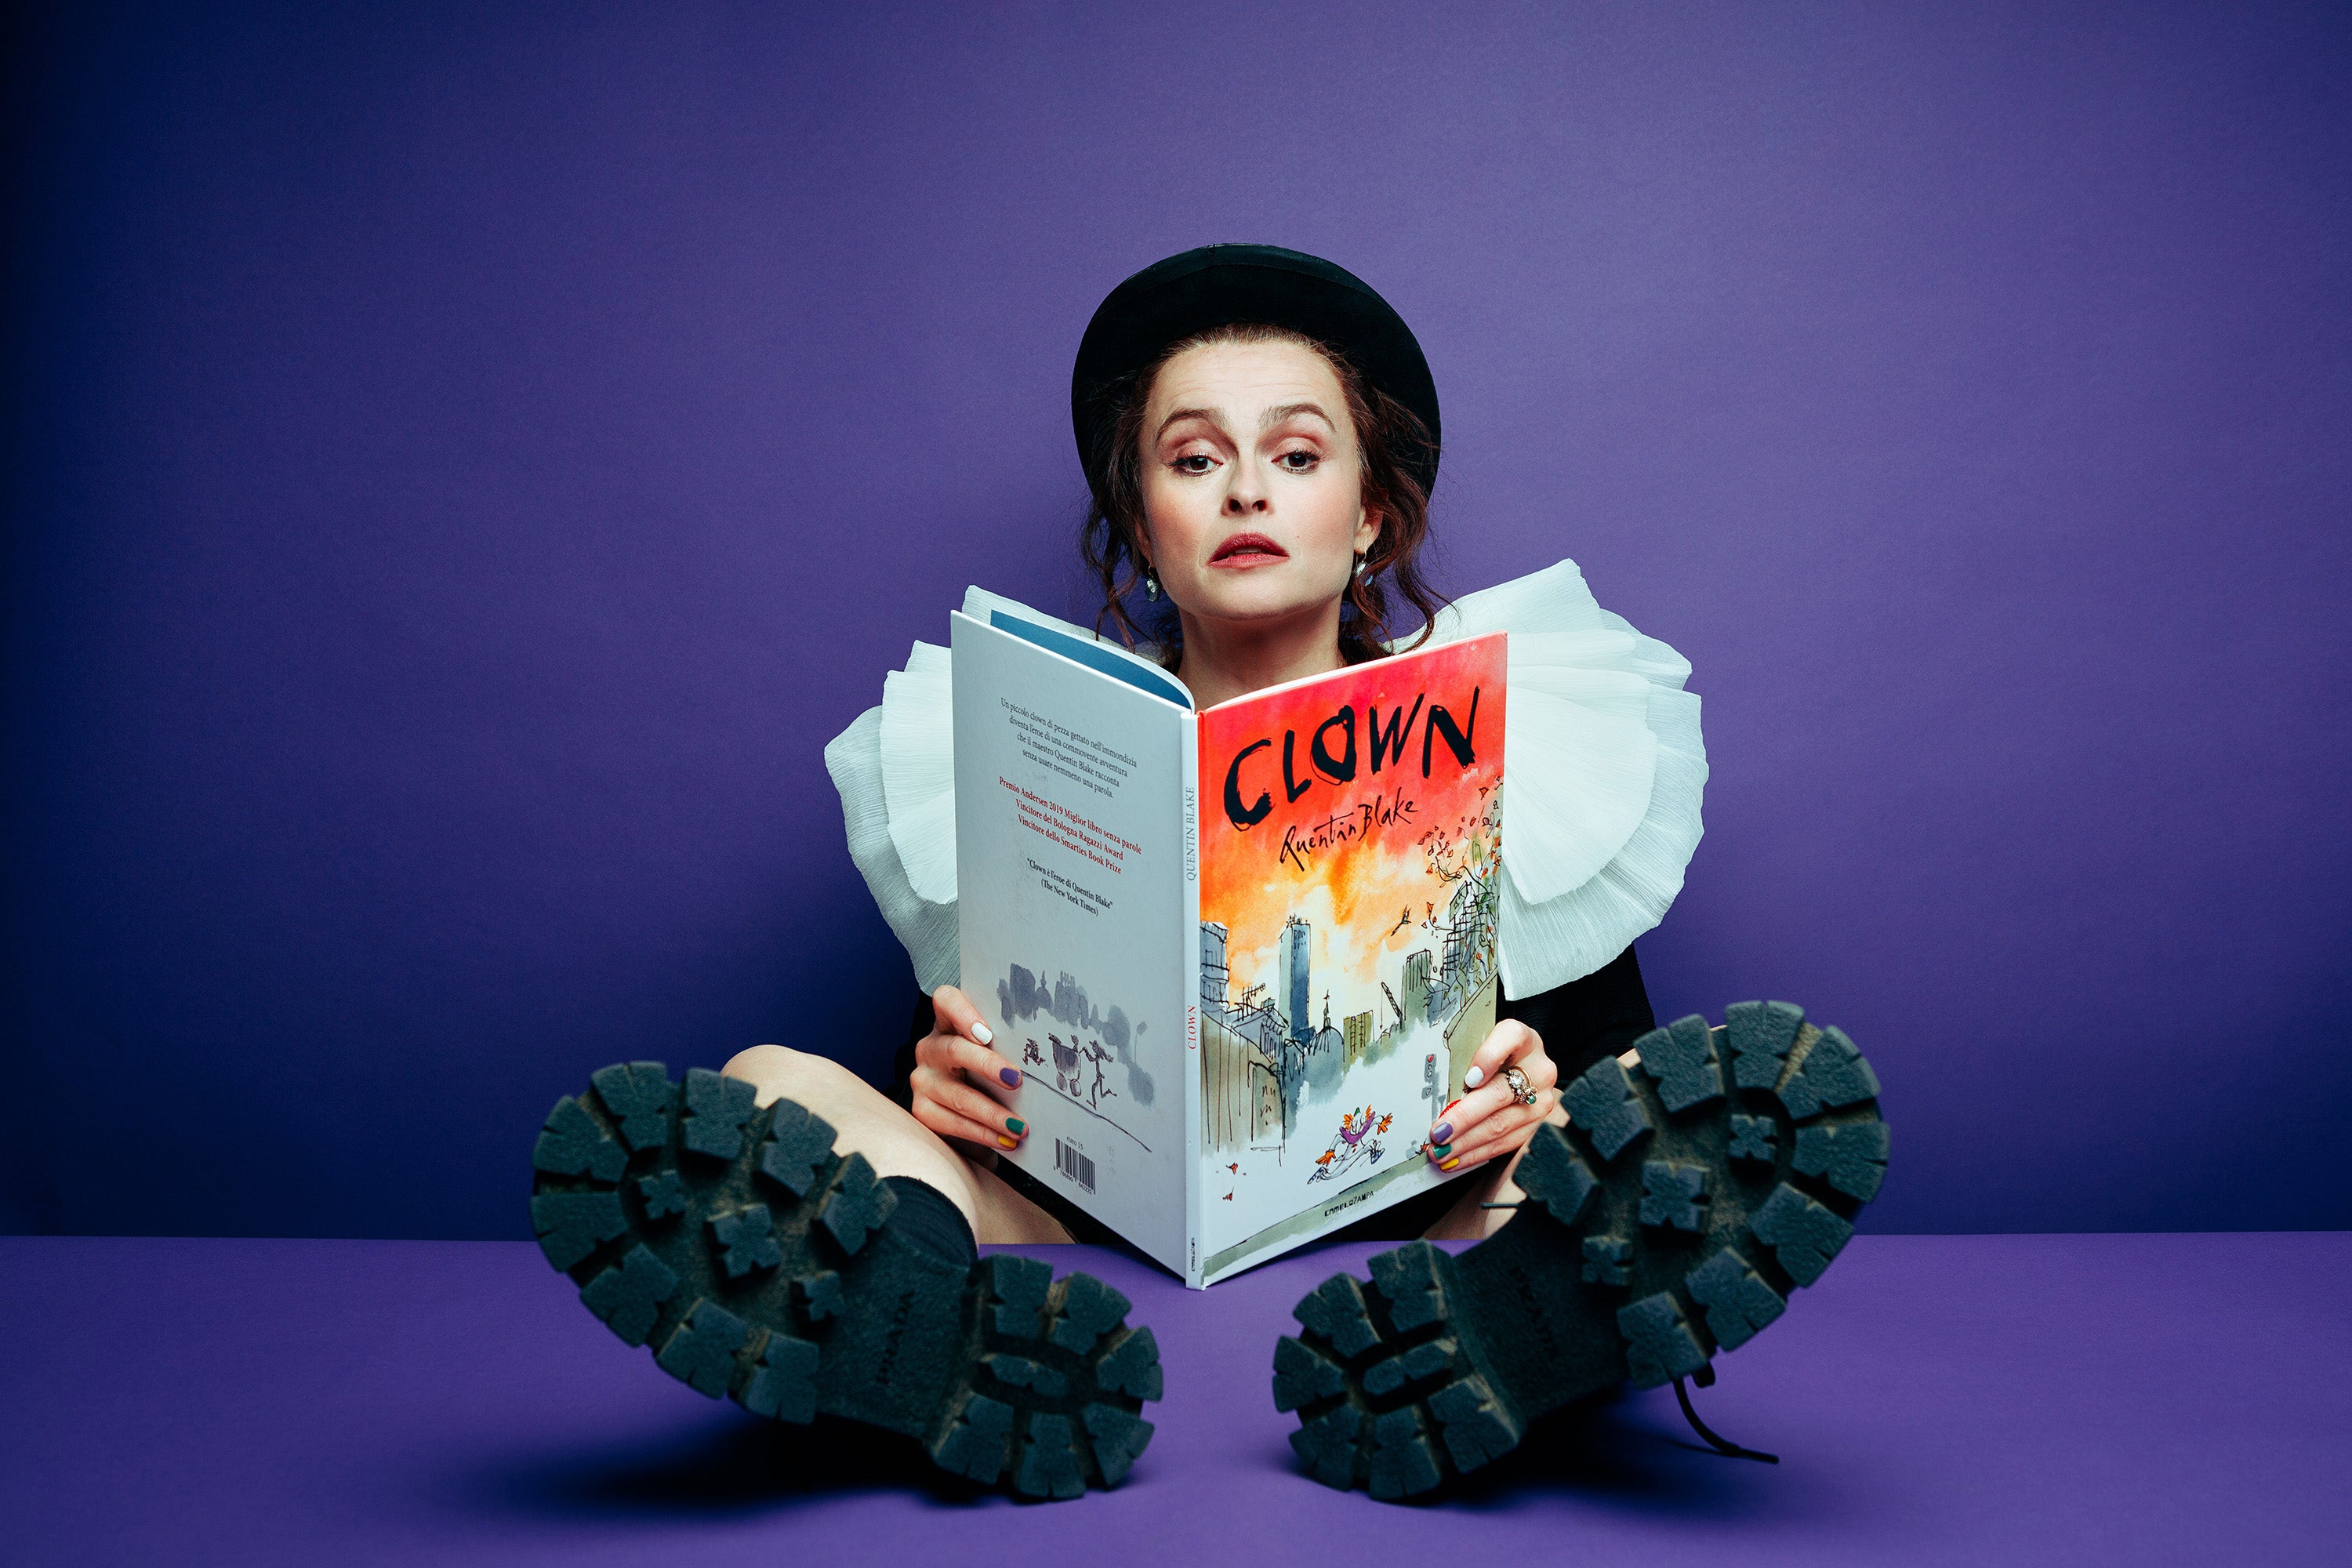 Helena Bonham Carter narrates the animated version of Quentin Blake's Clown